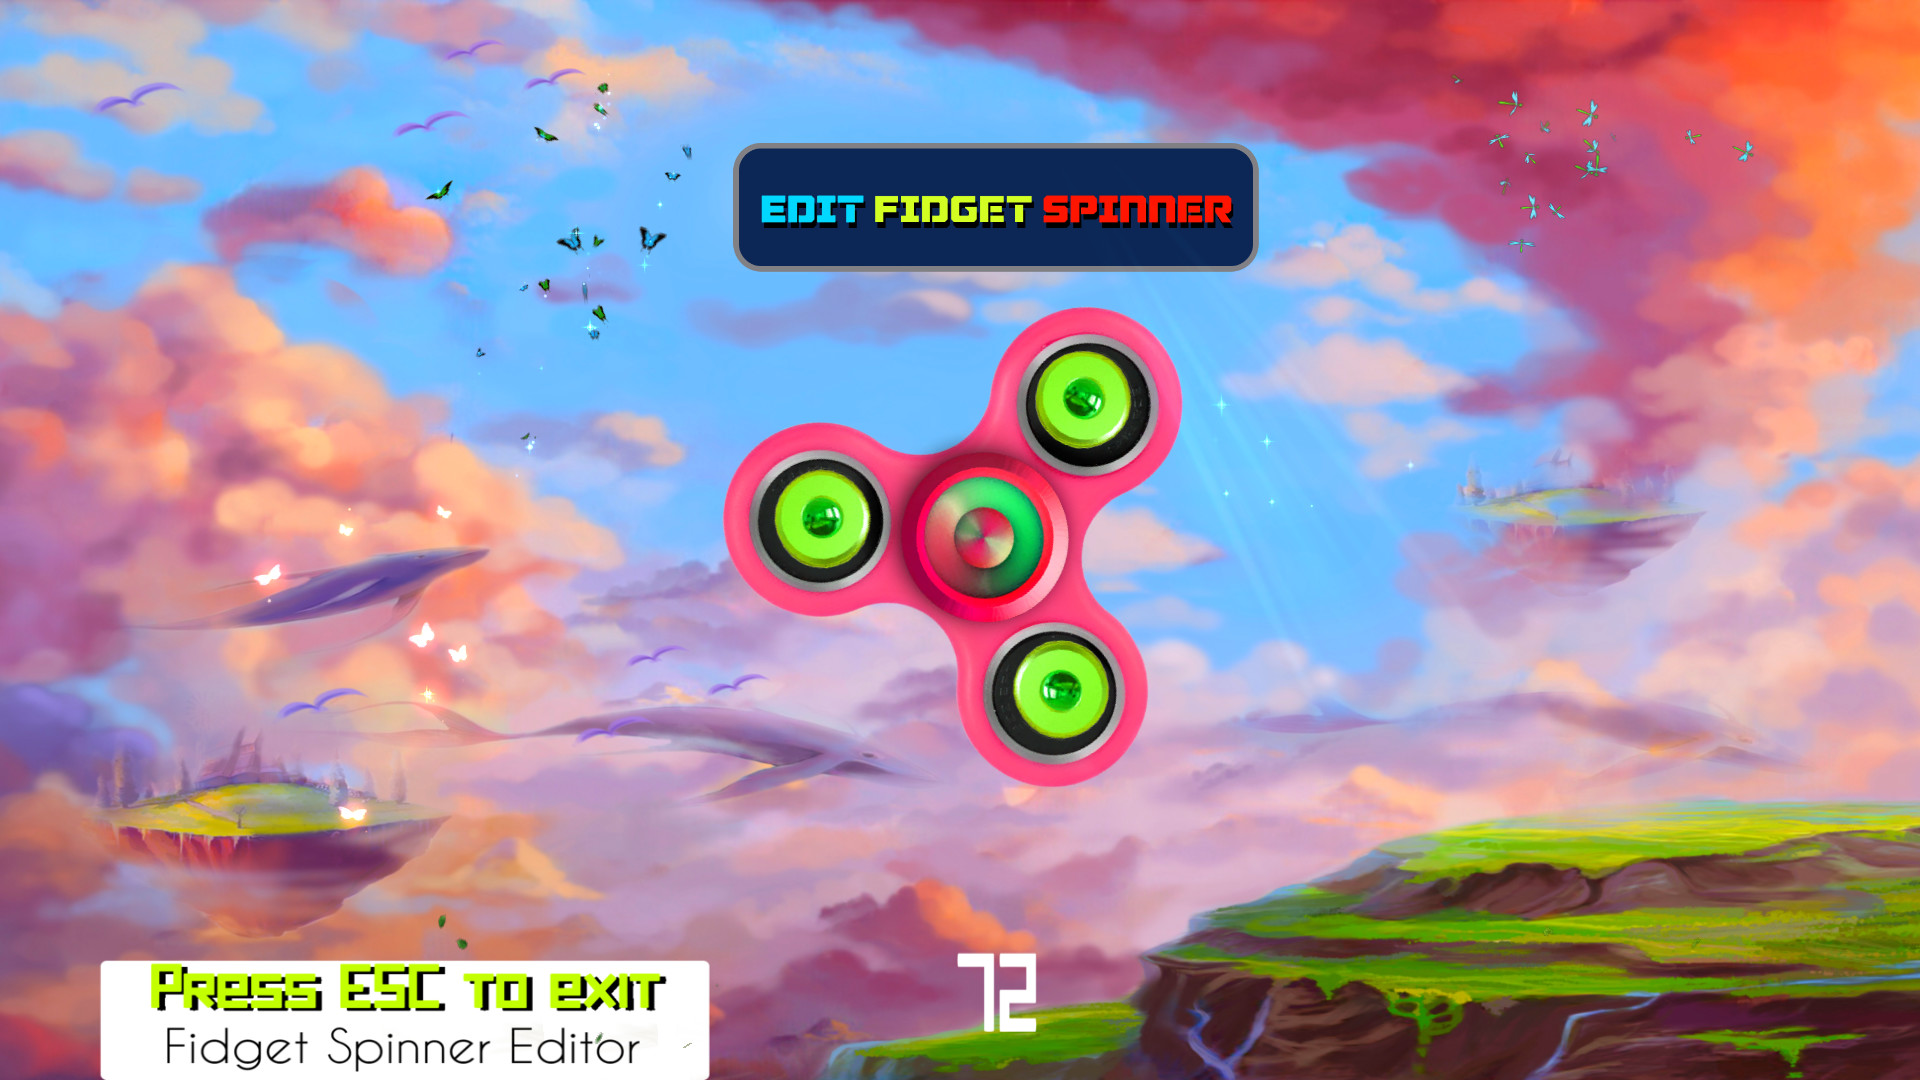 Fidget Spinner Editor - Expansion Pack 1 Featured Screenshot #1